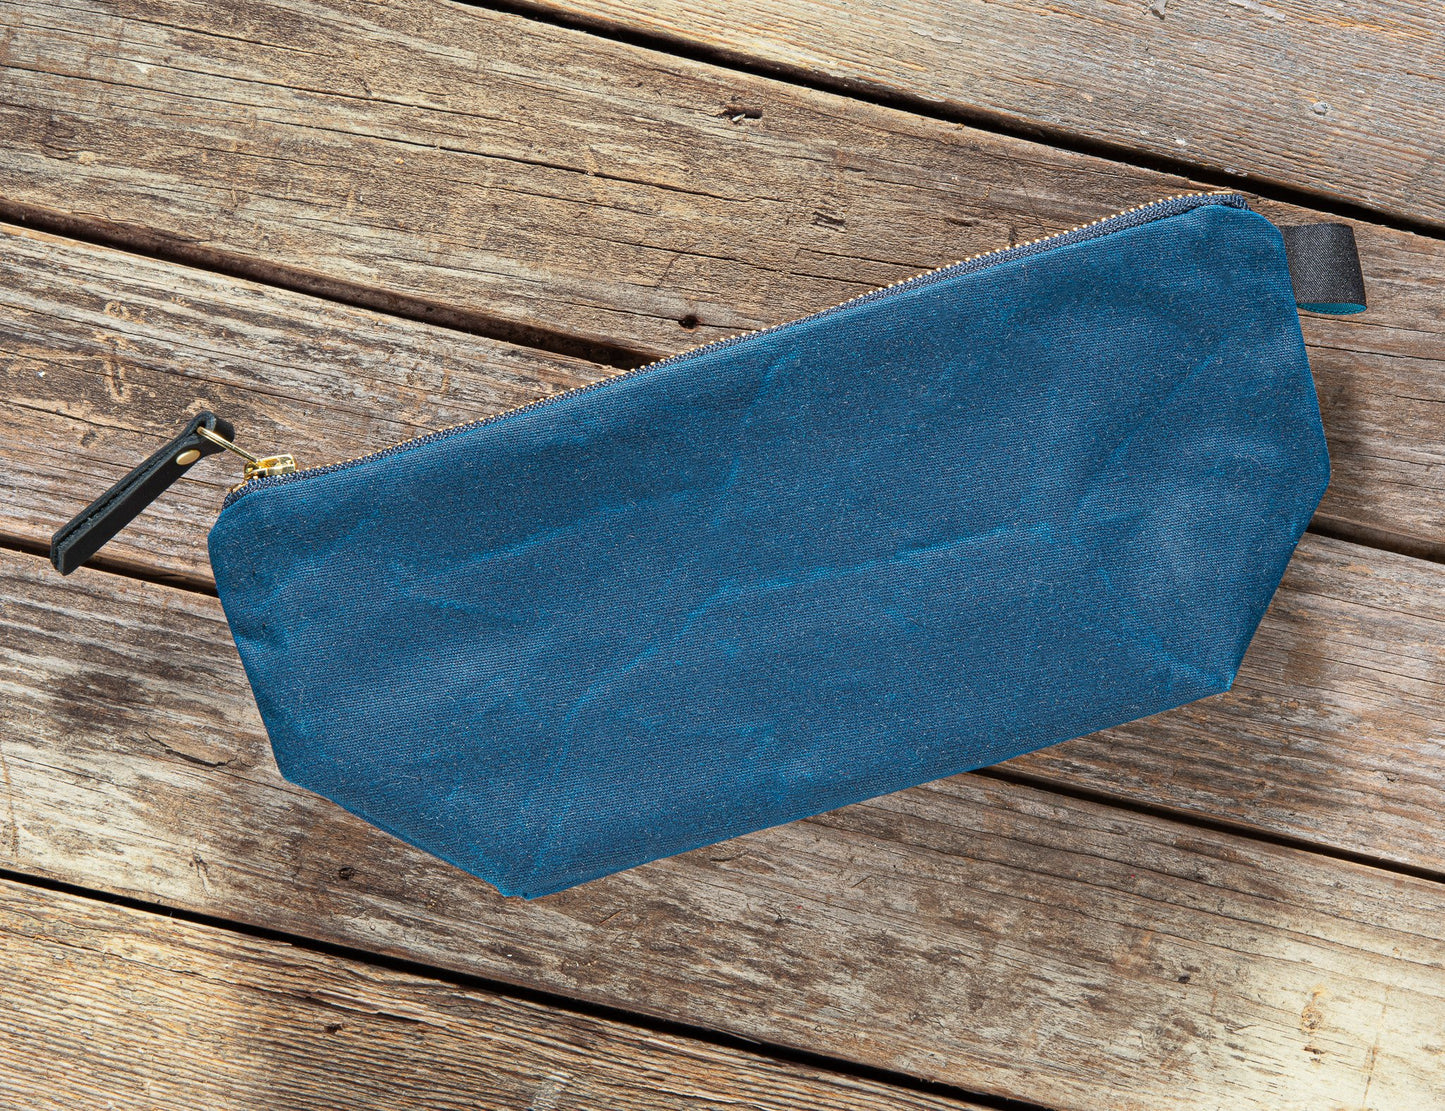 Sailor Blue Bag No. 1 - The Essentials Bag